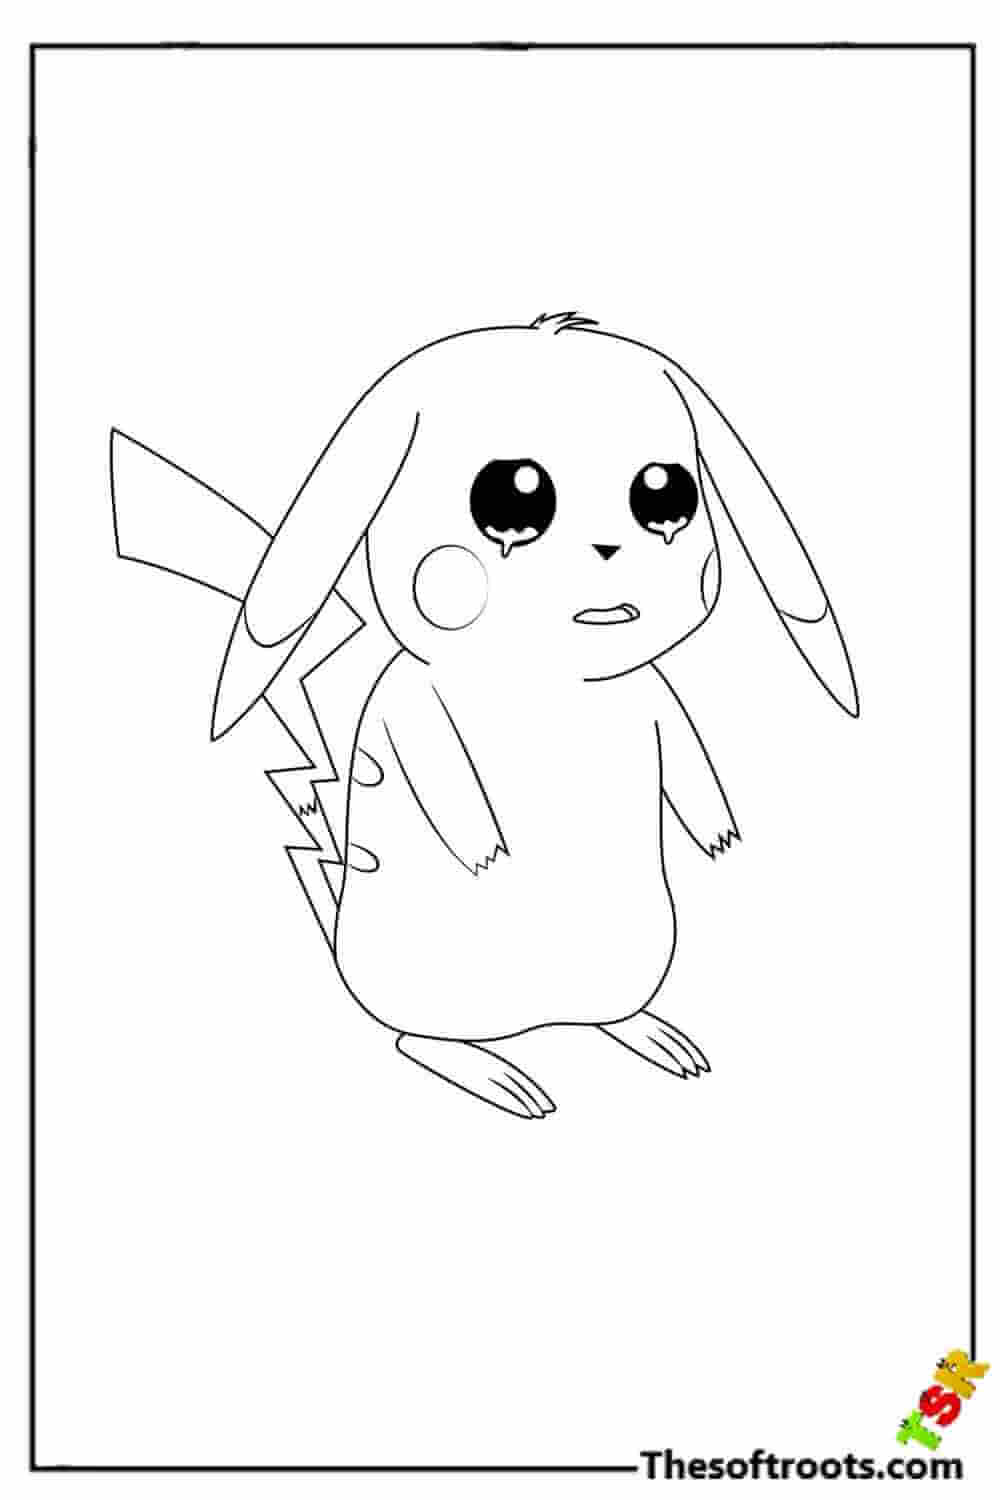 Sad Pikachu coloring pages